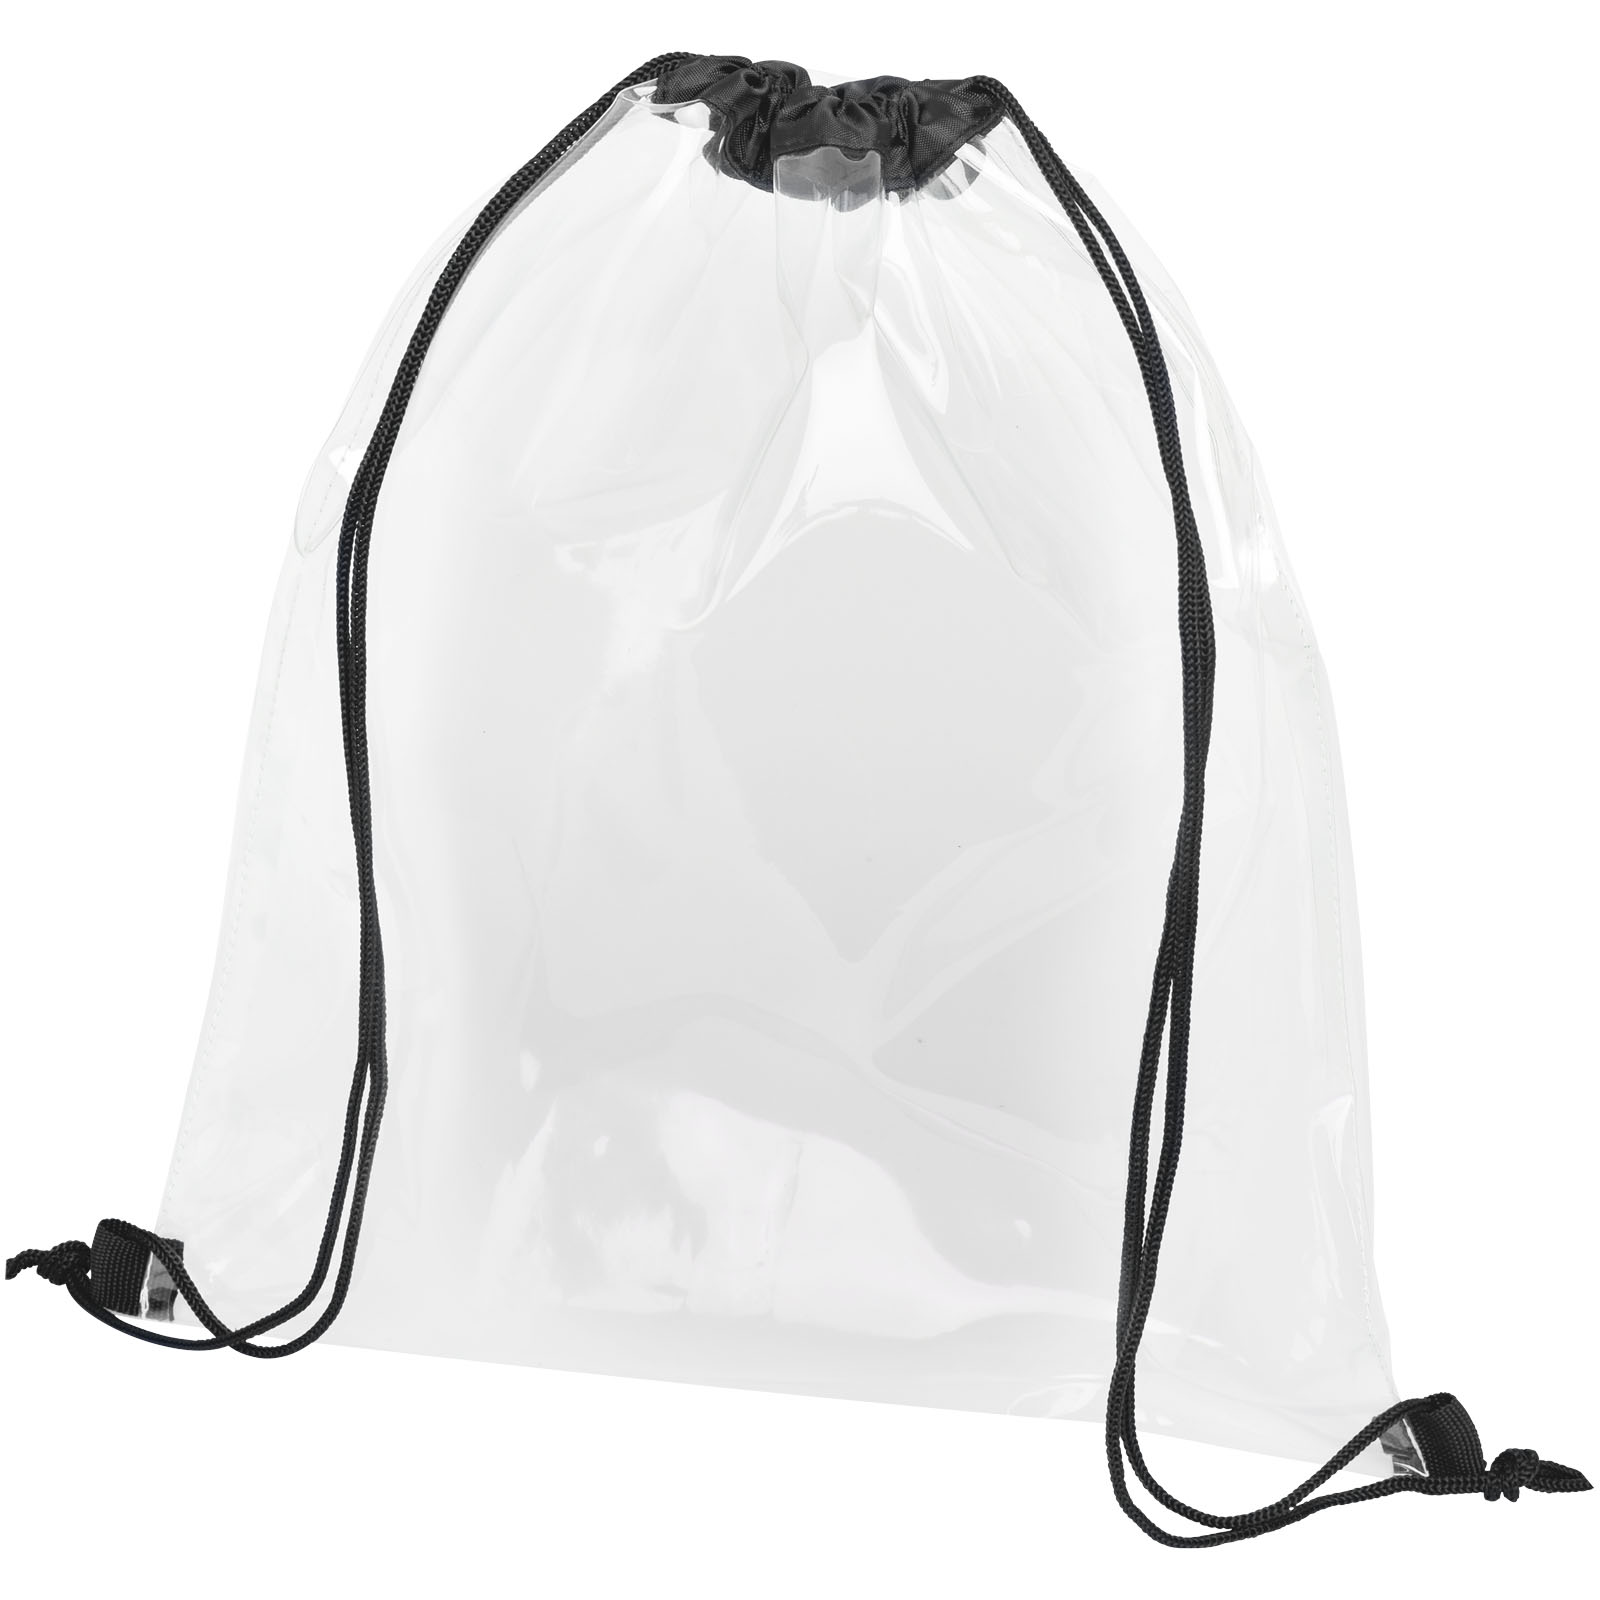 Drawstring Bags - Lancaster transparent drawstring backpack 5L